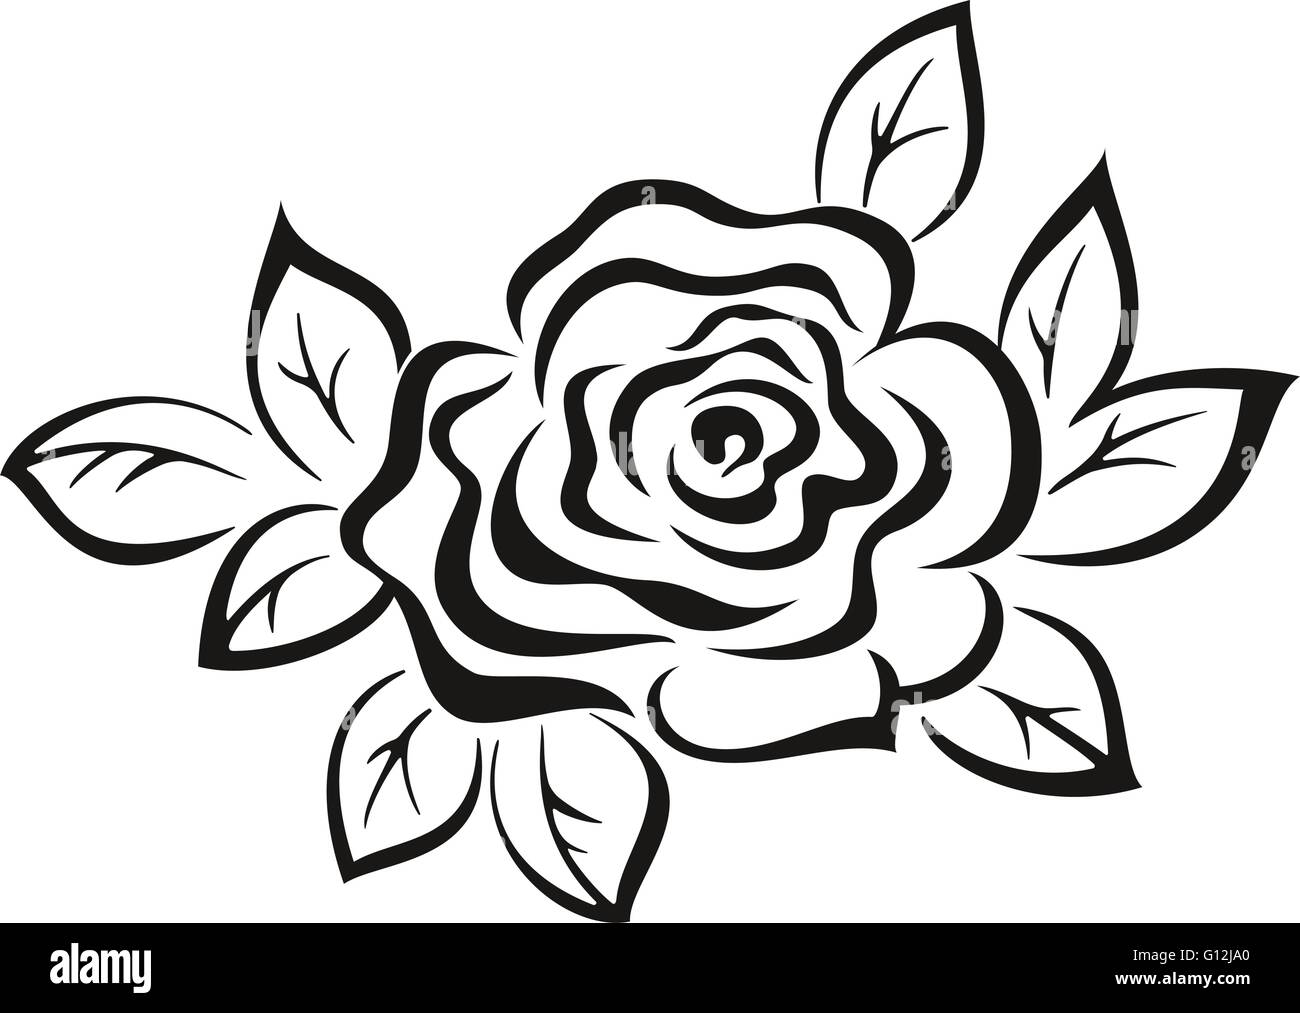 Rose Blume schwarz Piktogramm Stock-Vektorgrafik - Alamy